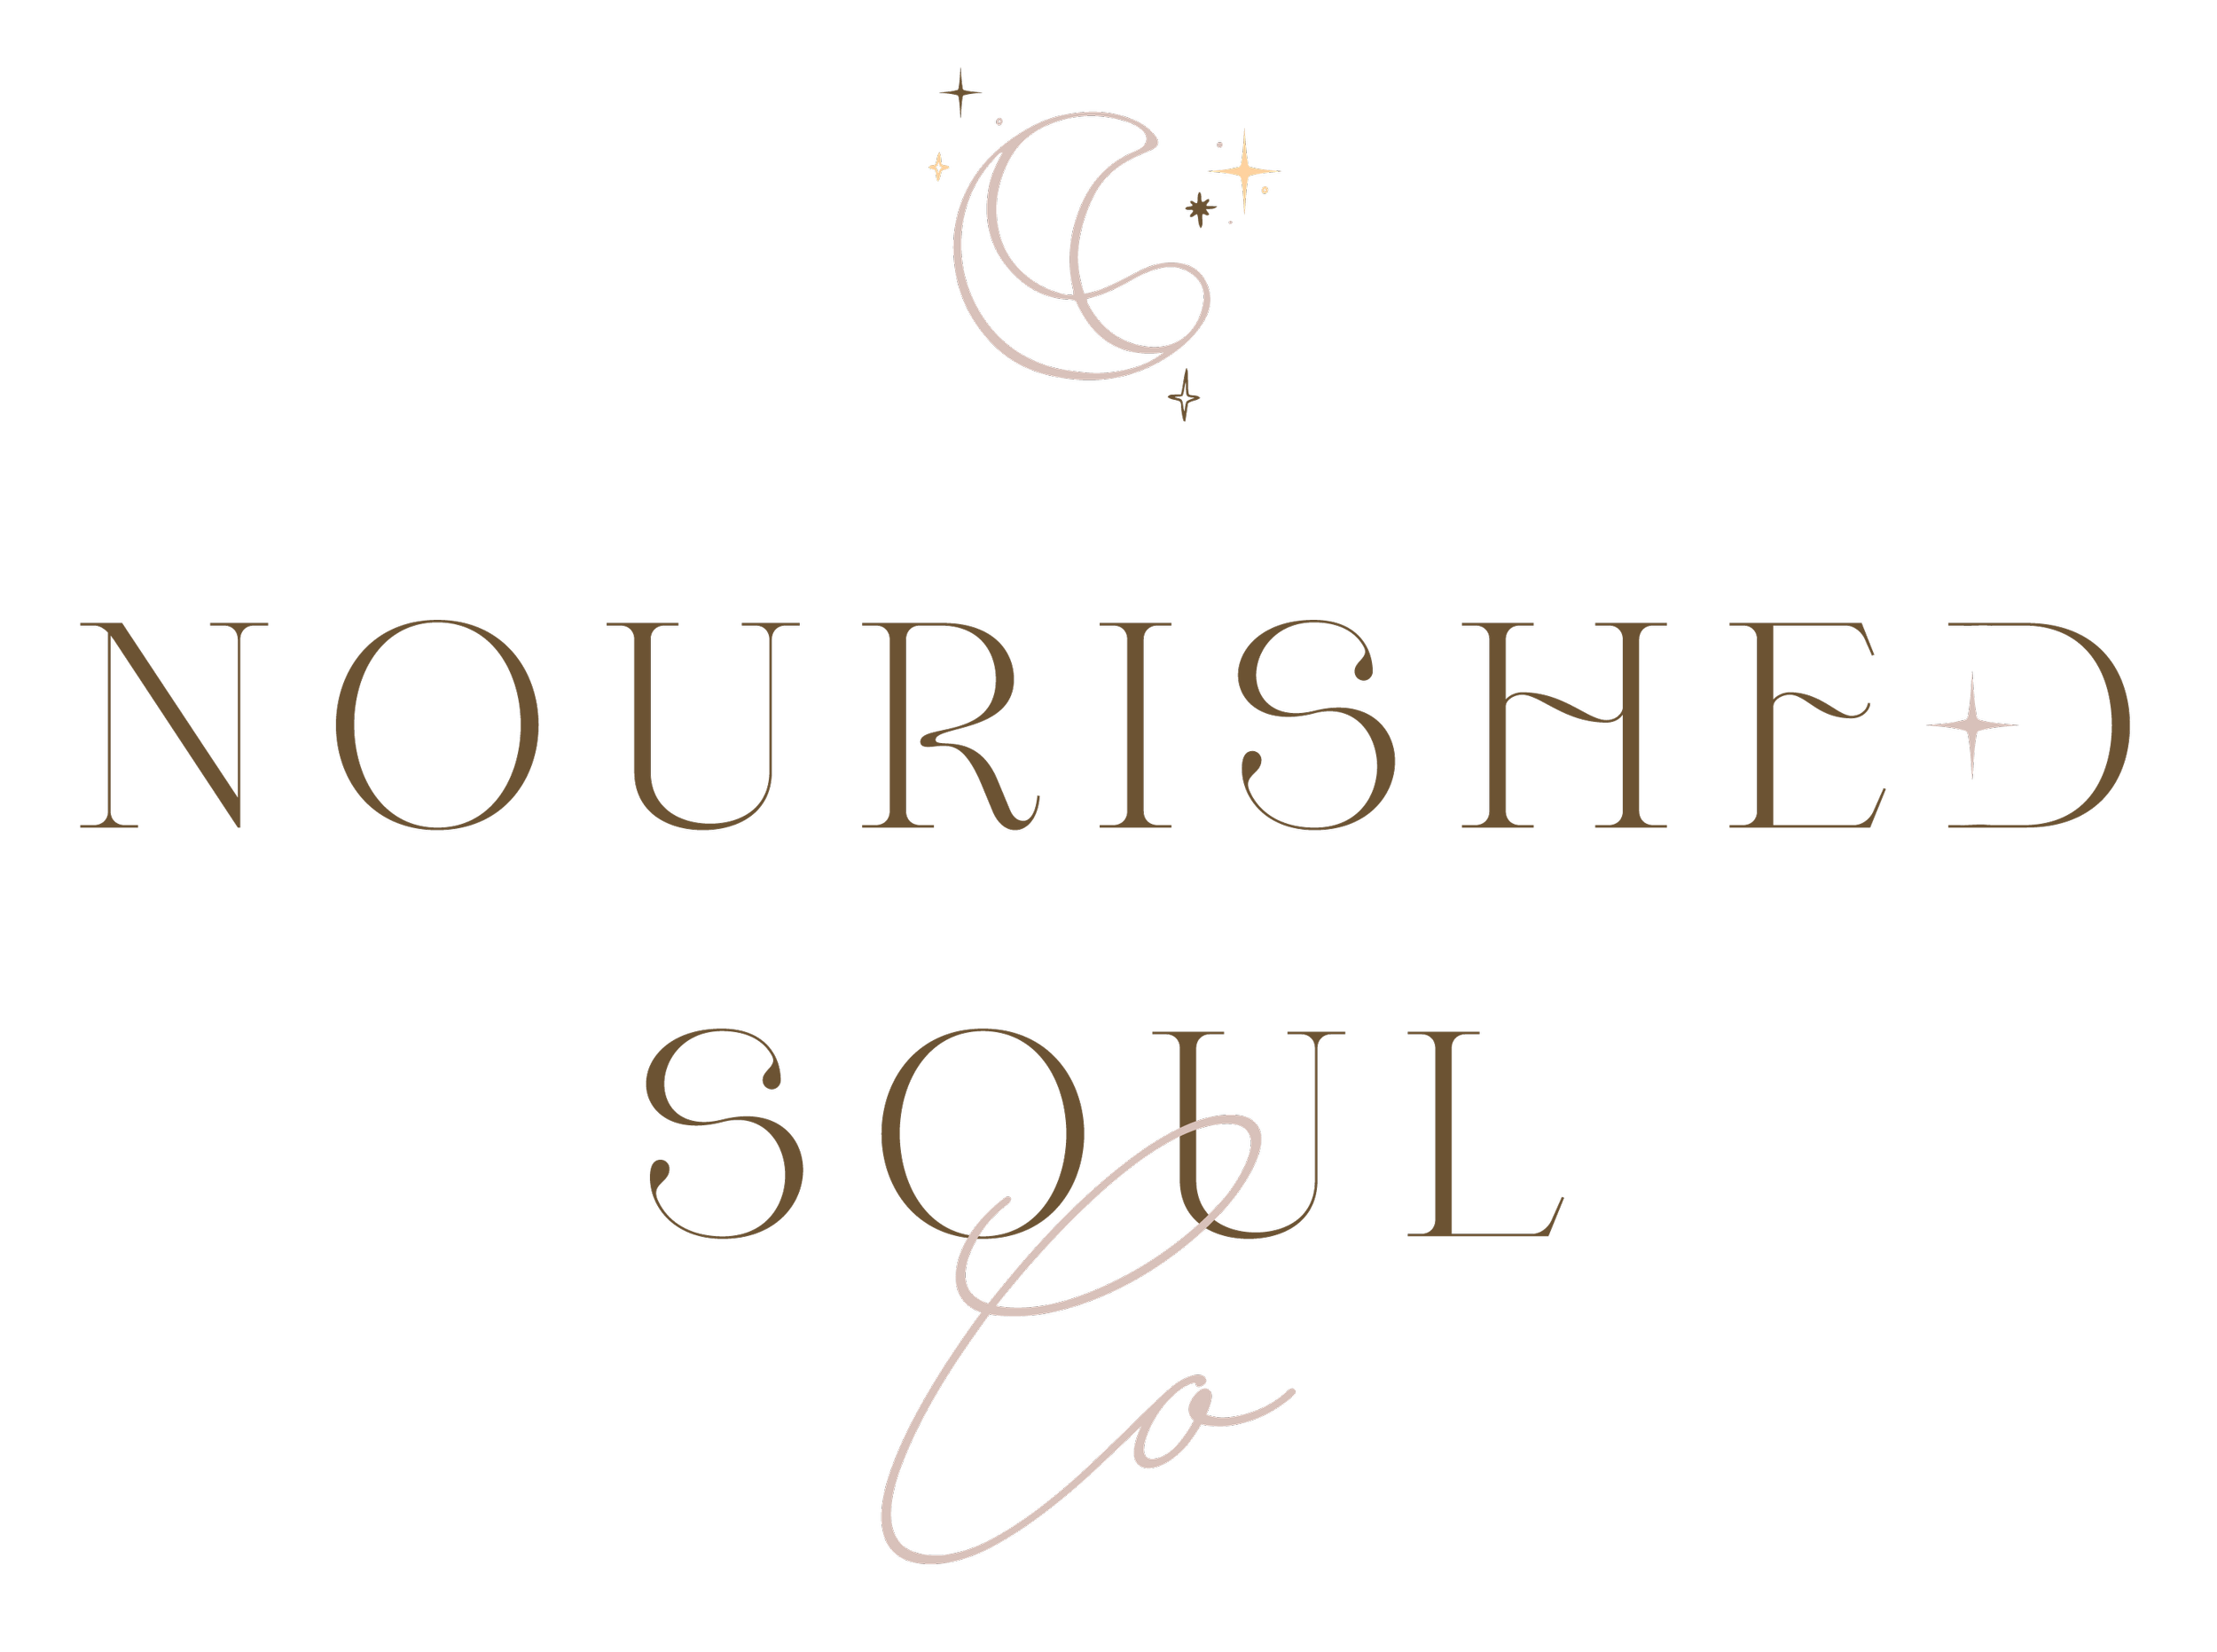 Nourished Soul Co